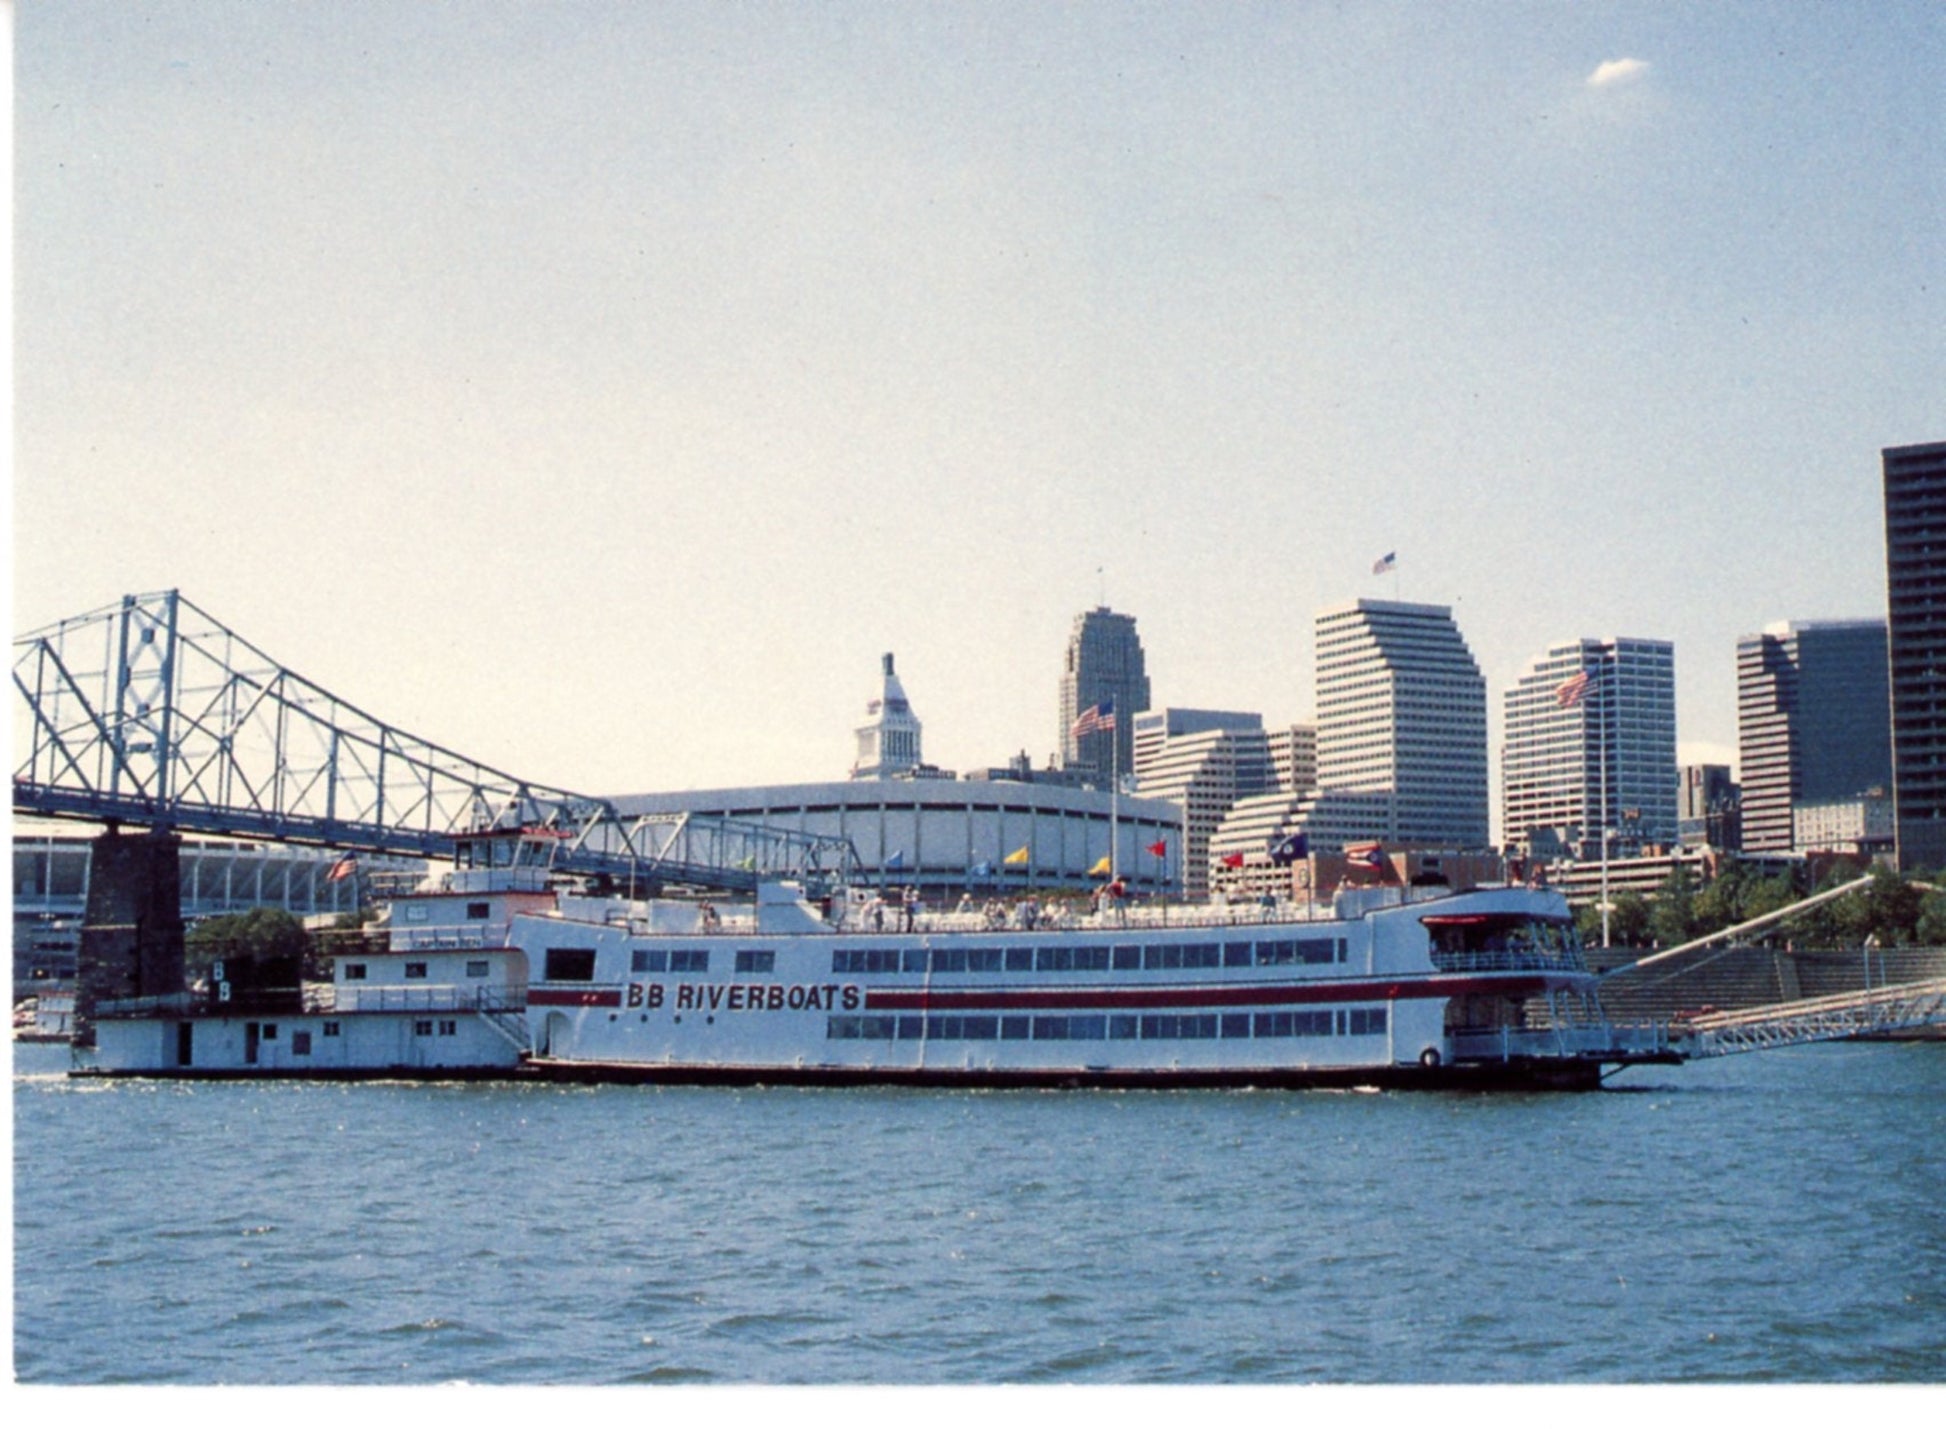 BB Riverboats "Cincinnati Covington Fun Liner" CINCINNATI OHIO Large Vintage Postcard 4" x 6"